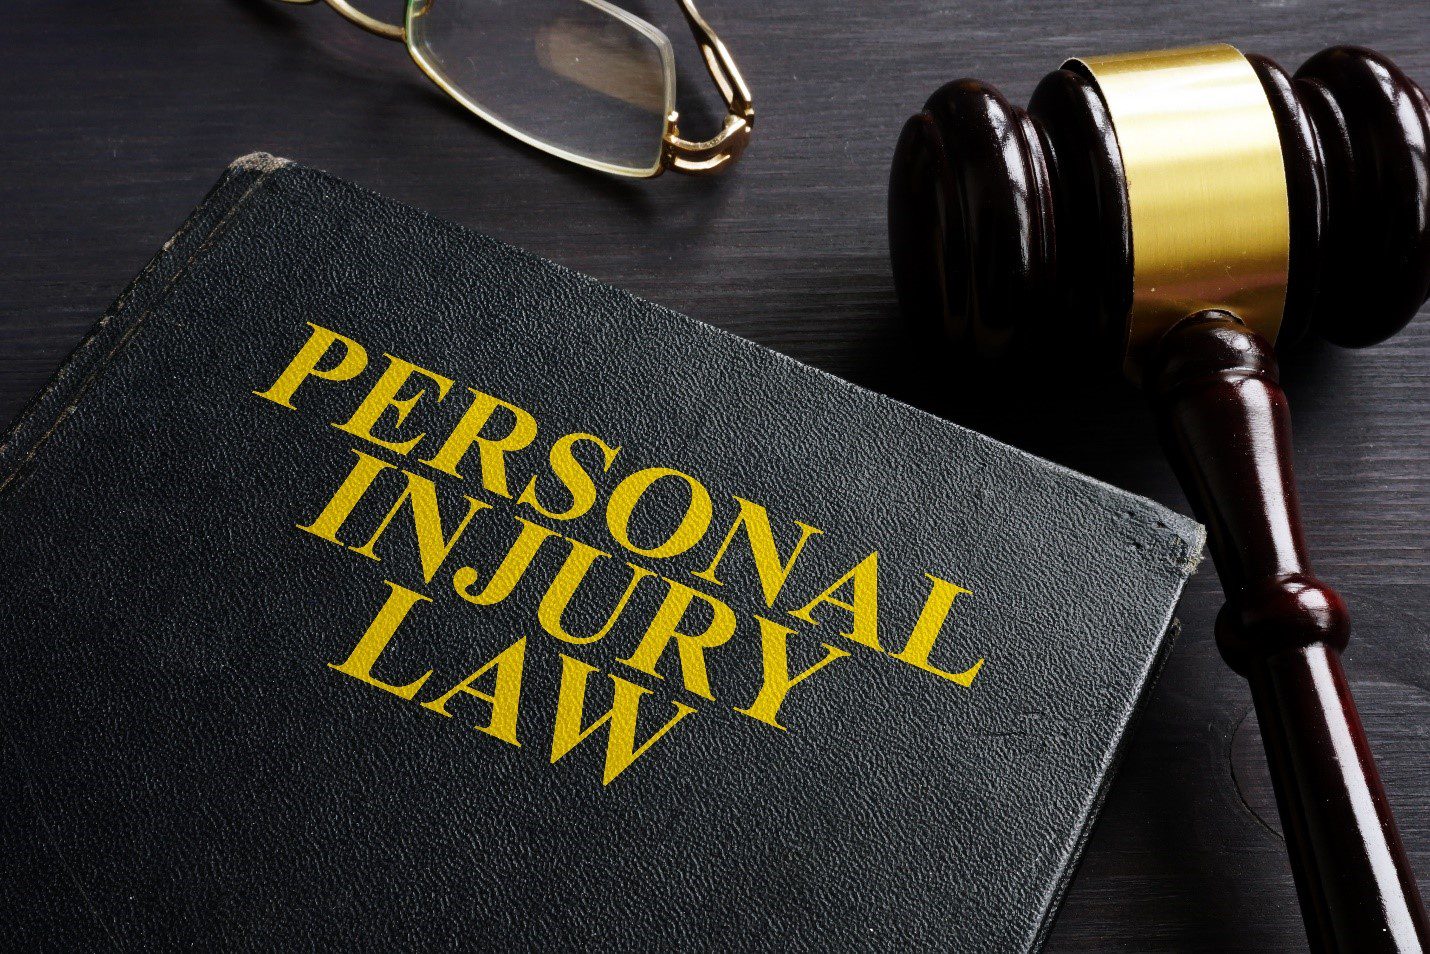 Personal Injury Law & Gavel